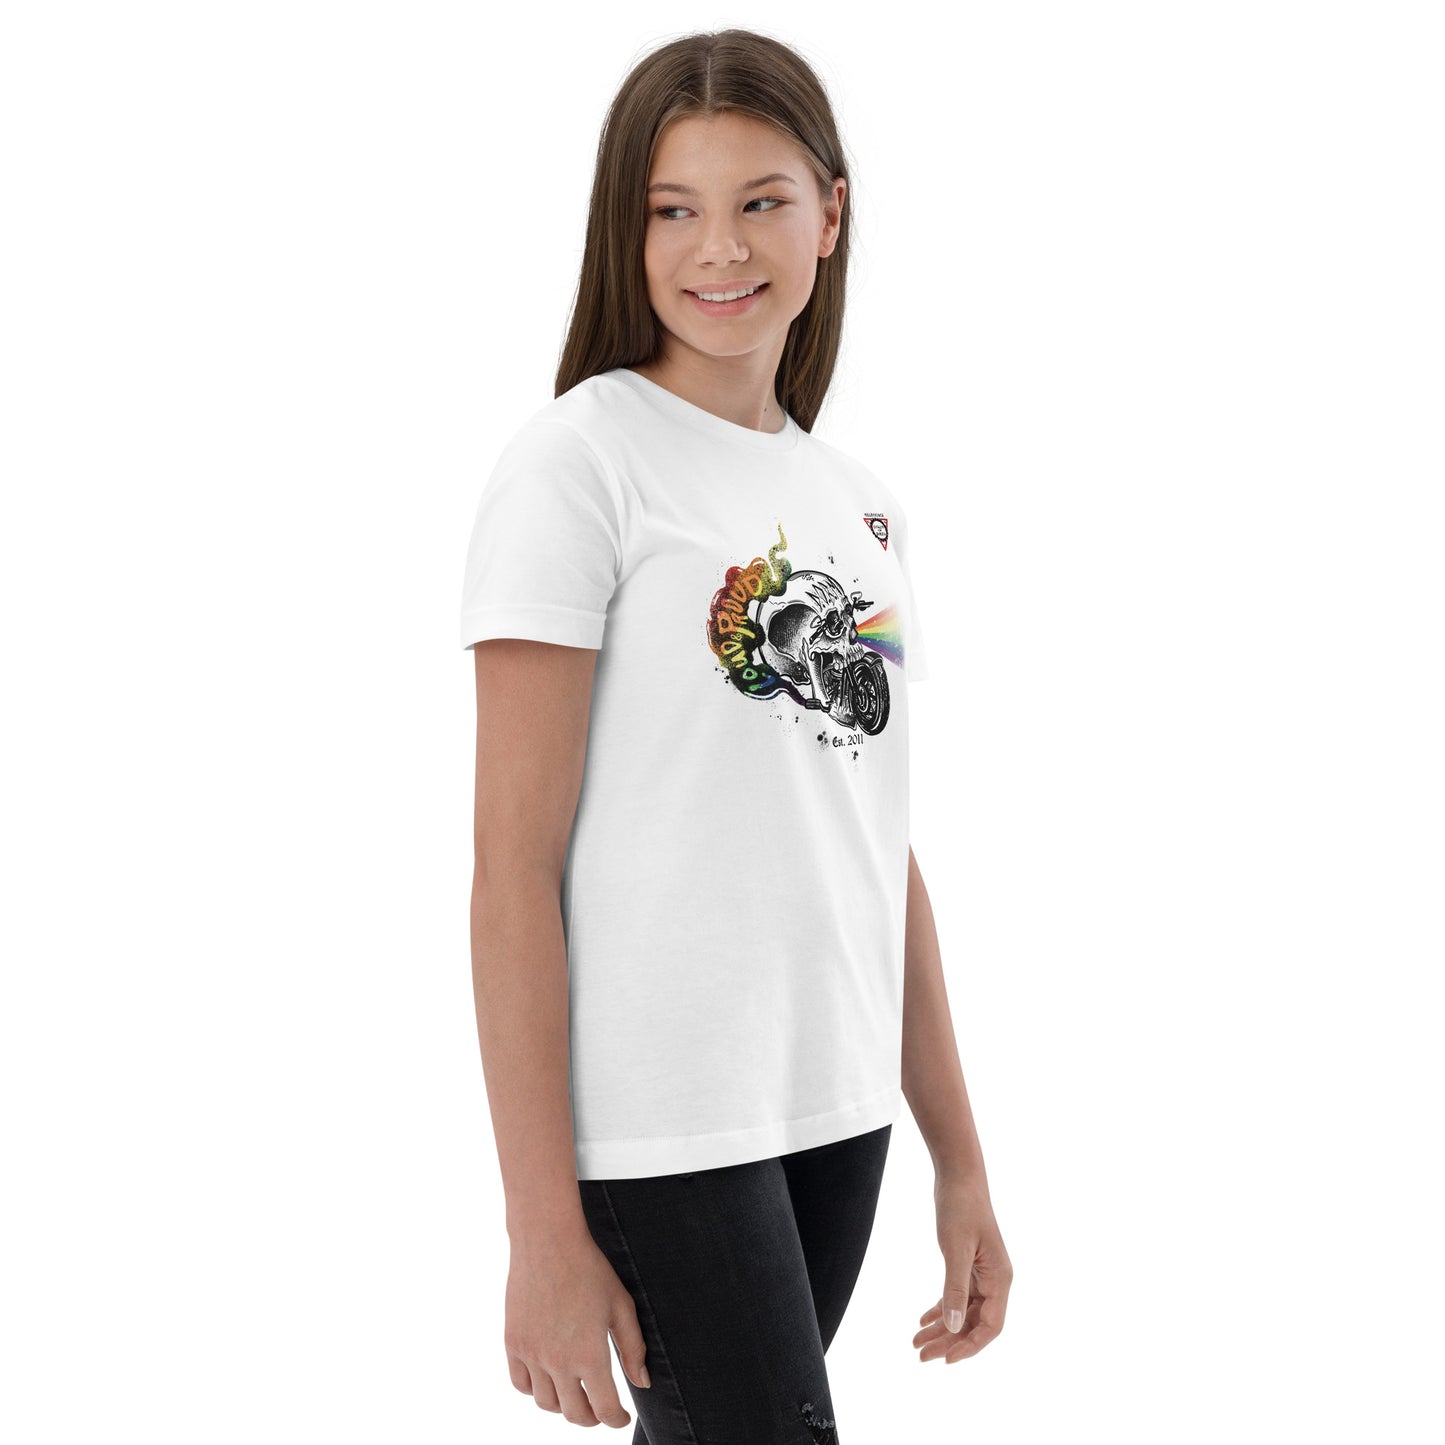 Youth jersey t-shirt - Loud & Proud Motomouth - Rainbow print